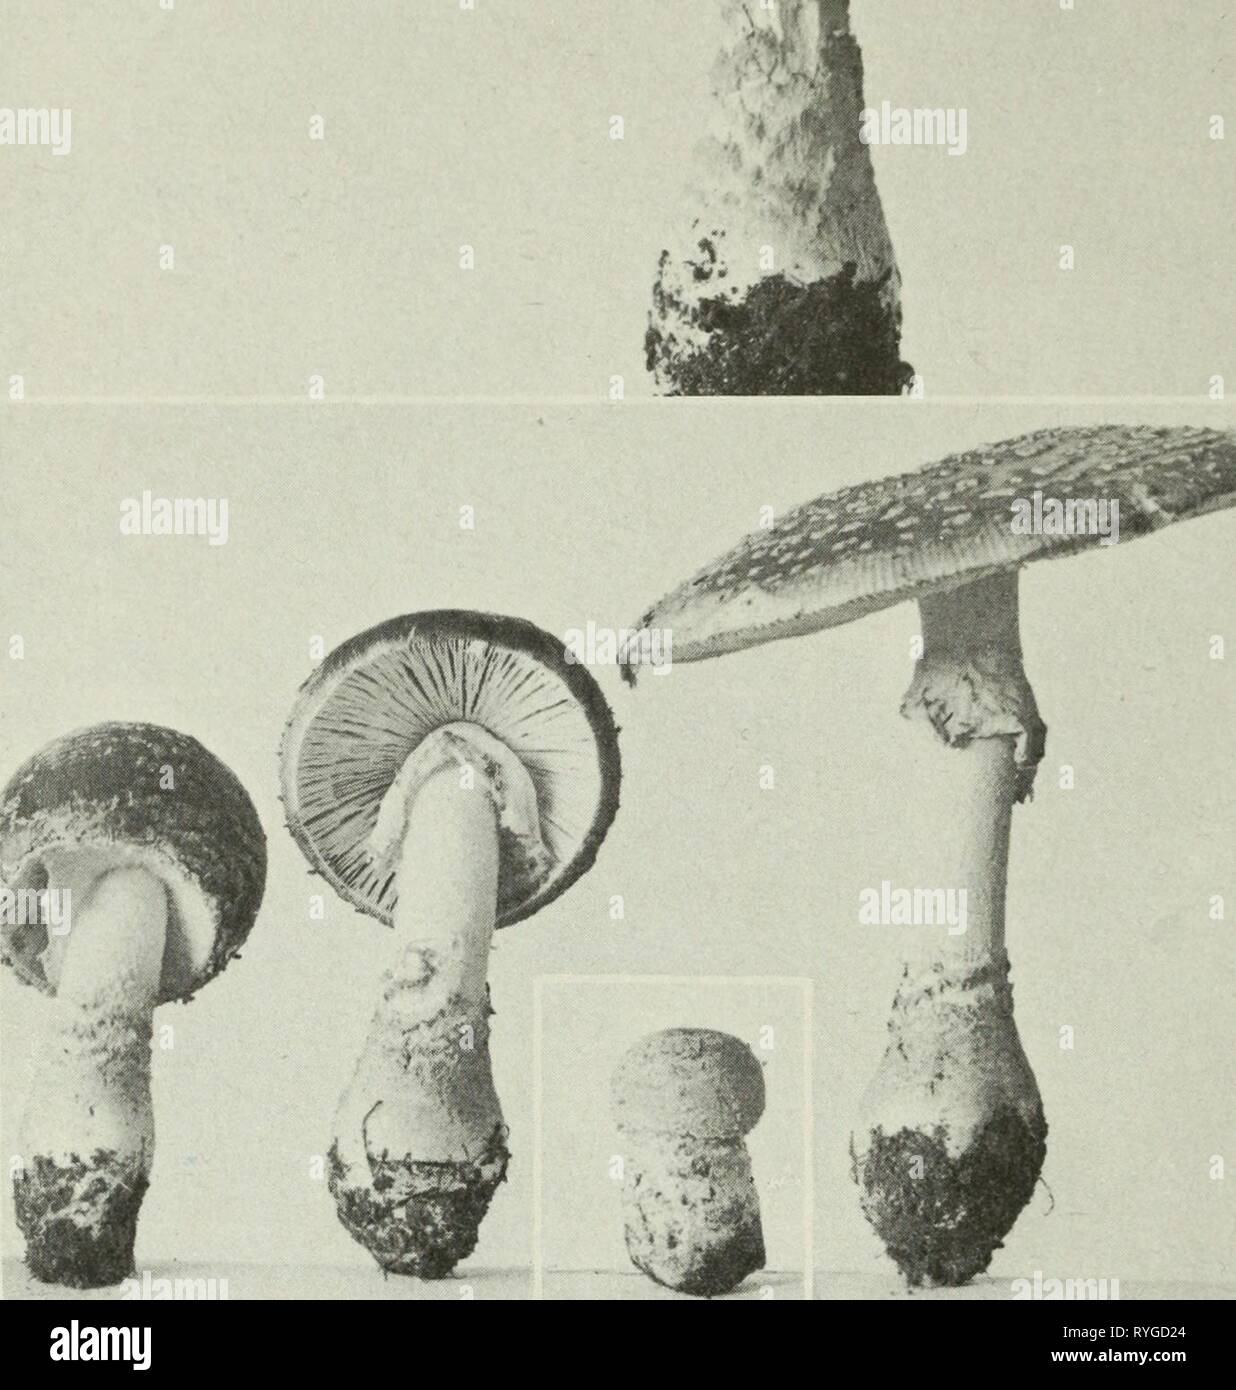 Edible and poisonous mushrooms of Canada  ediblepoisonousm00grov Year: 1979    104 Figures 103-104. Amanita muscaria. 103, mature plant, note volva adhering to base of stipe in irregular rings and patches; 104, series of specimens illustrating the tearing of the volva to leave patches on the pileus and base of the stipe, and the tearing of the partial veil to form the annulus. 105. Russula abietina. 107. R. chamaeleontina. 109. R. Integra. 111. R. xerampelina. 113. Tricholoma pessundatum. Figures 105-114 106. 108. 110. 112. 114. aeruginea. decolorans. R. R. R. mariae. Pleurotus serotinus. Mara Stock Photo